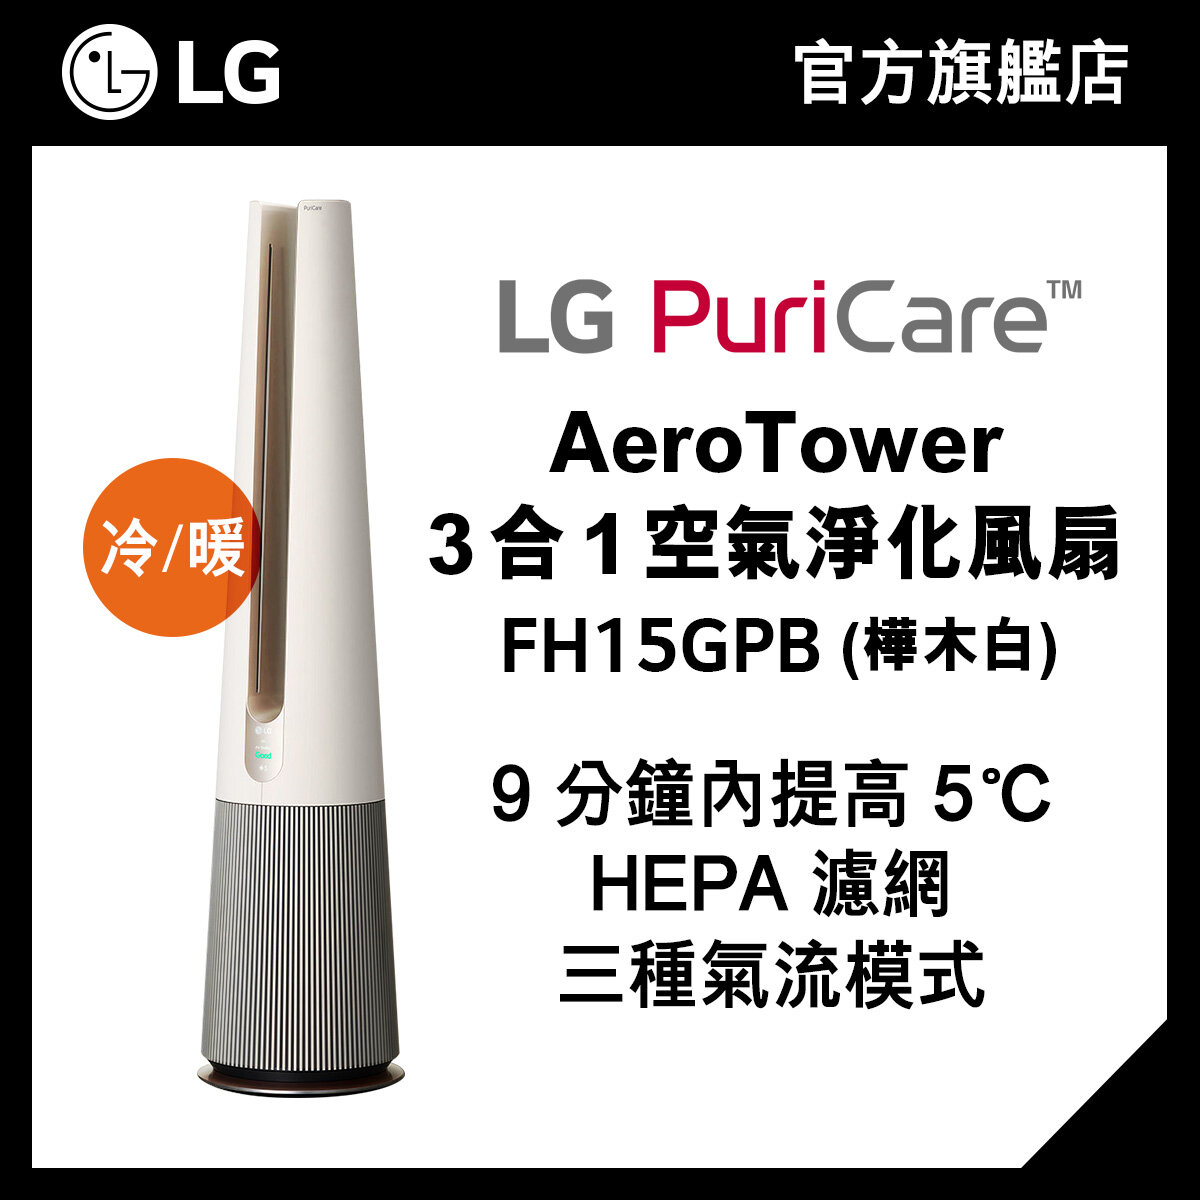 LG PuriCare™ AeroTower 3 合 1 空氣淨化風扇 (樺木白), 設暖風